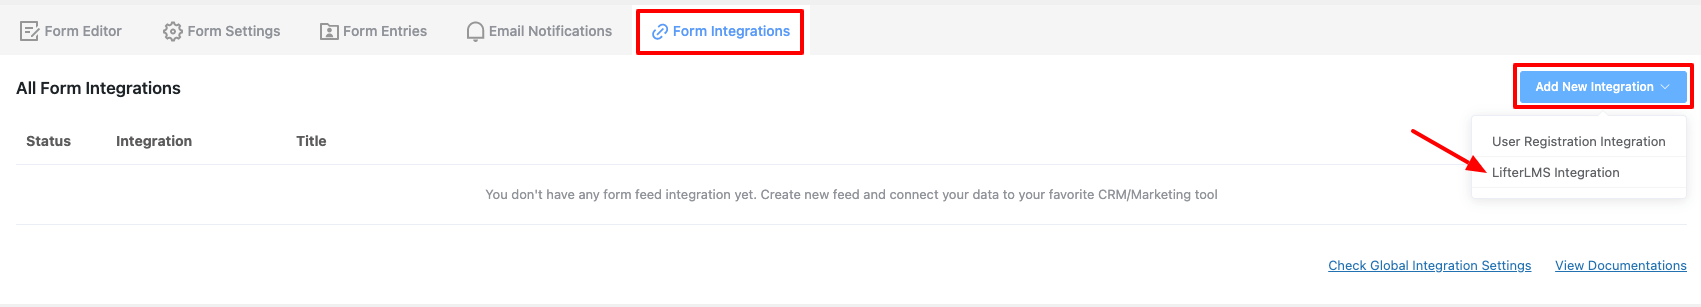 Add new integration